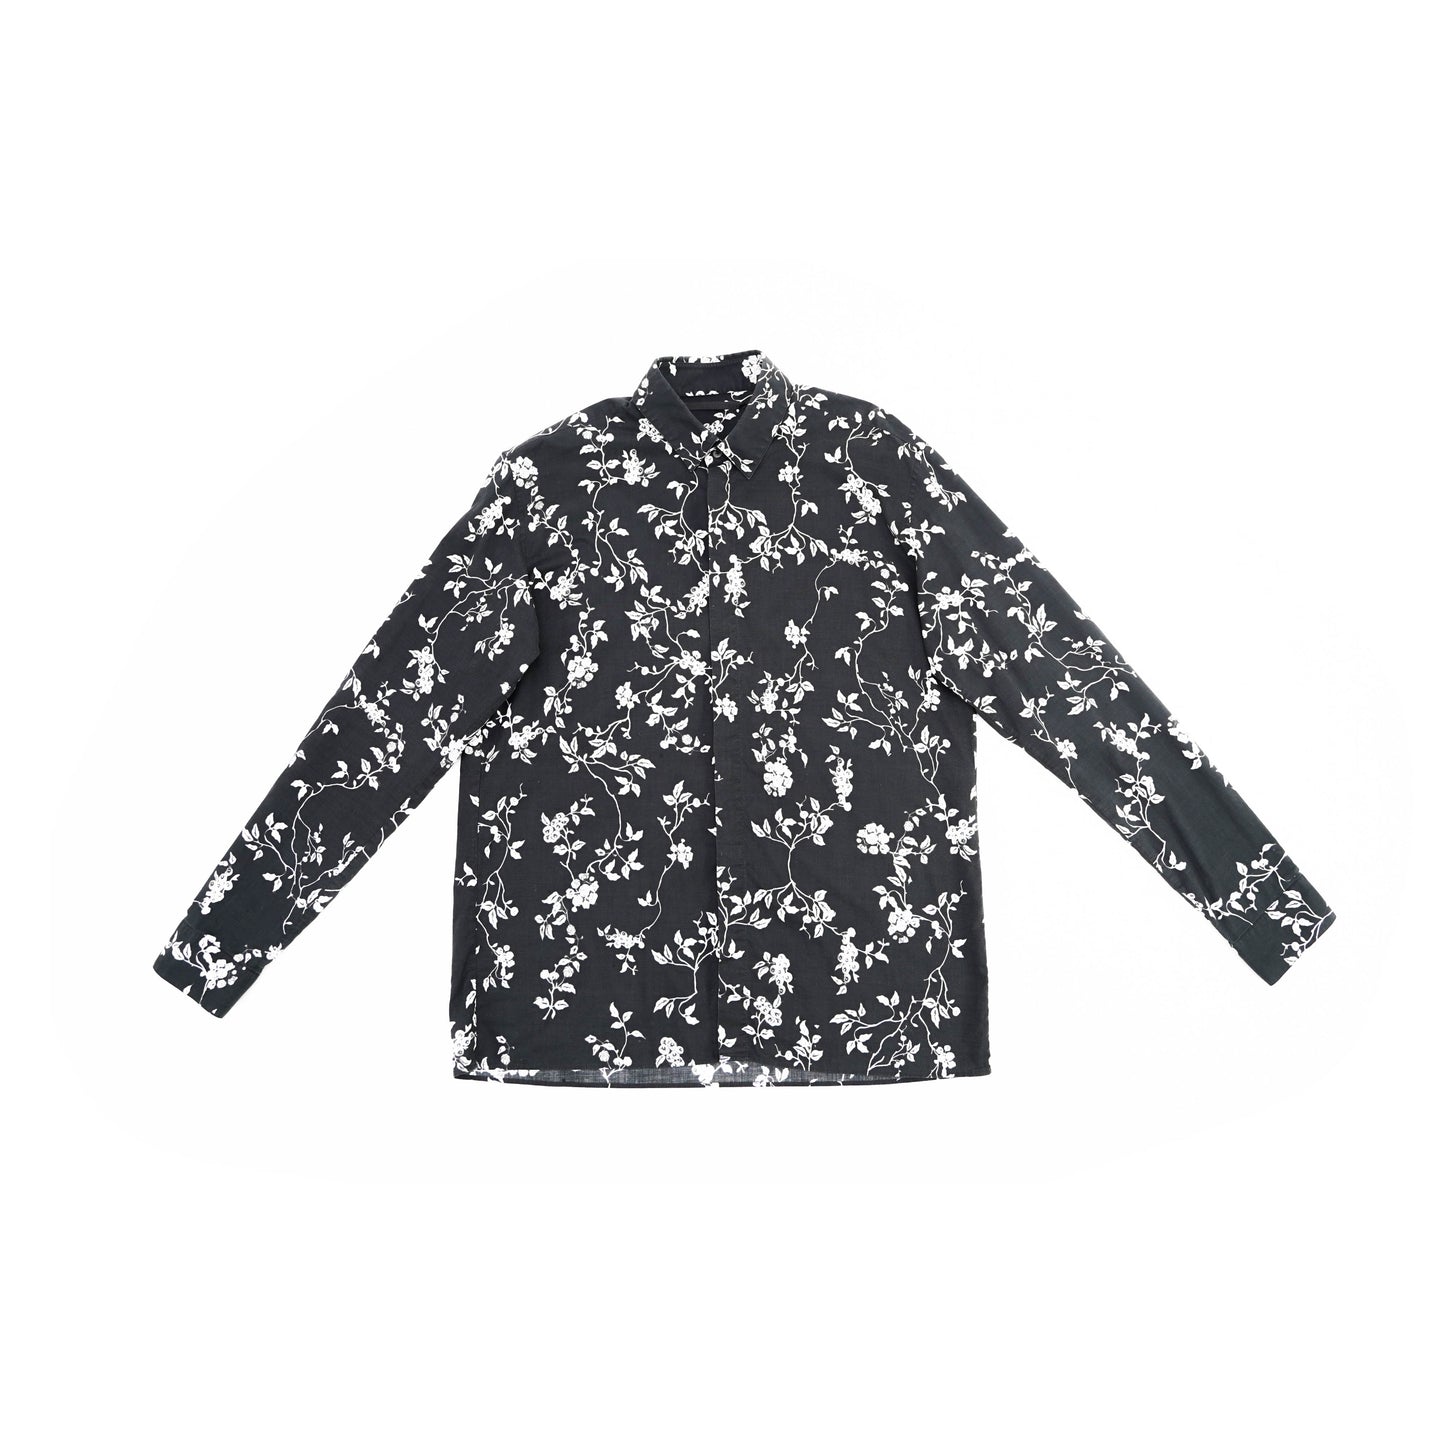 SS15 Black Floral Shirt